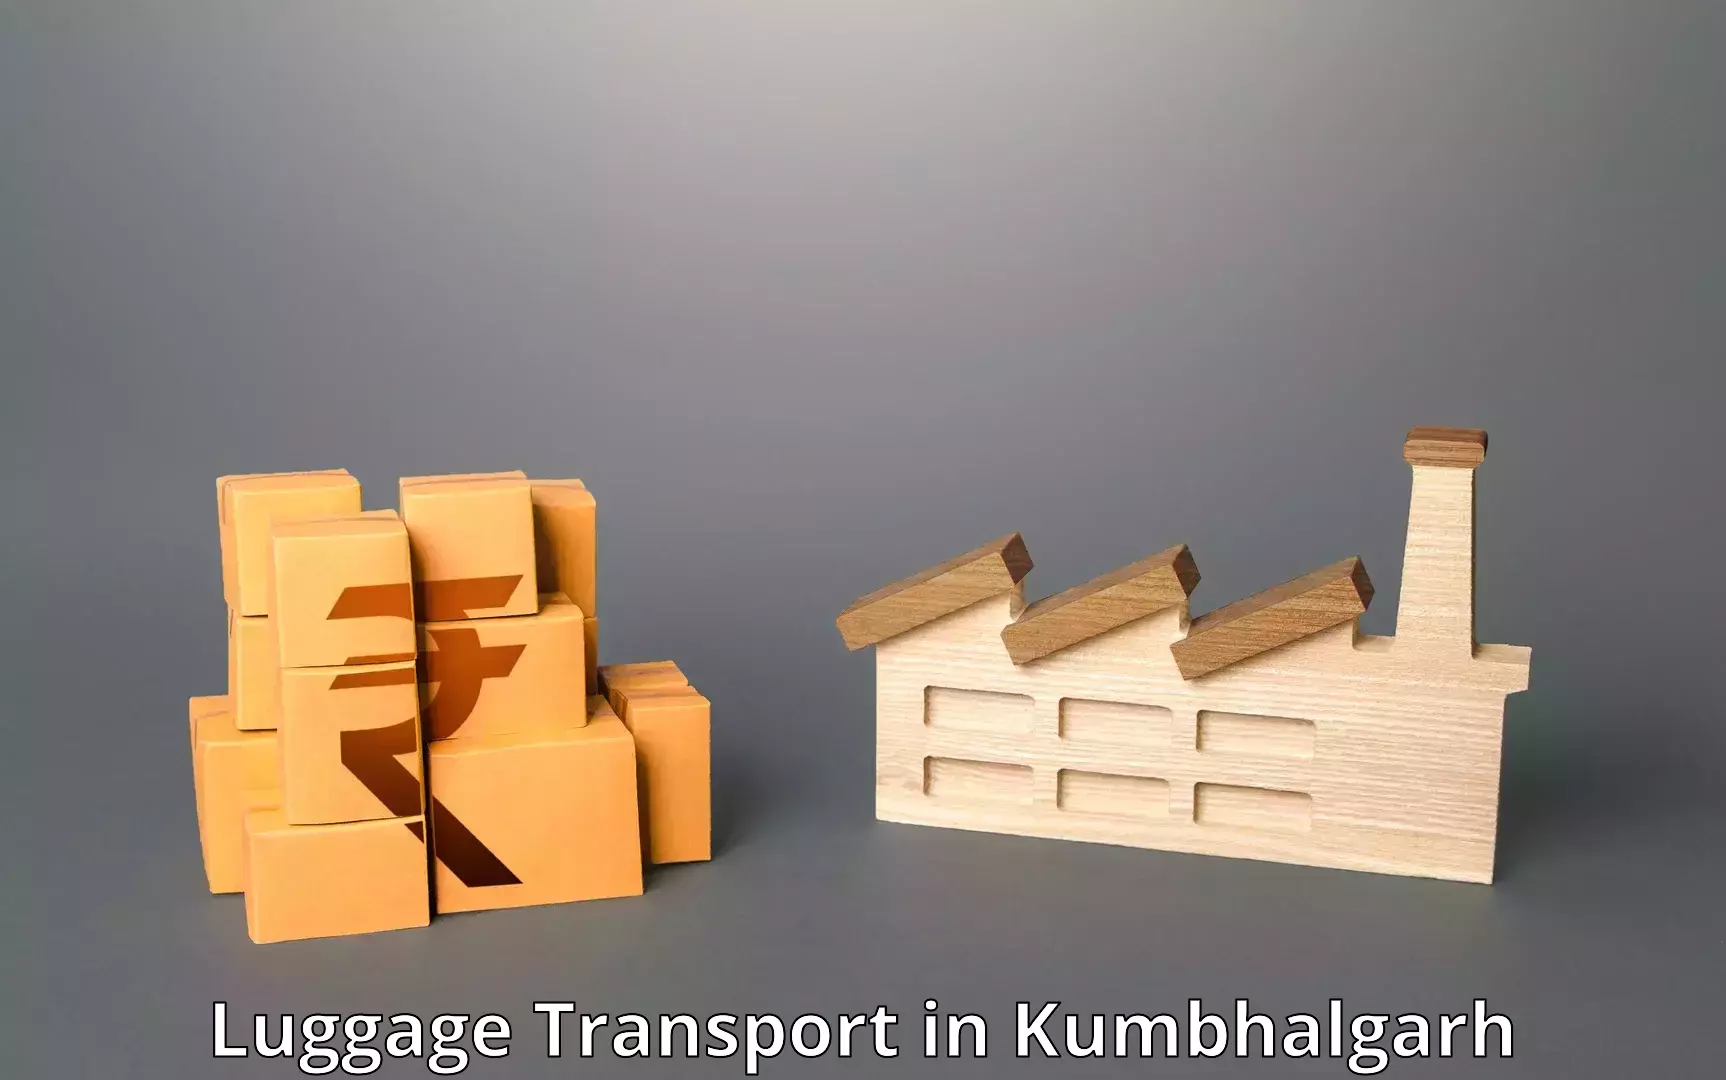 Corporate baggage transport in Kumbhalgarh